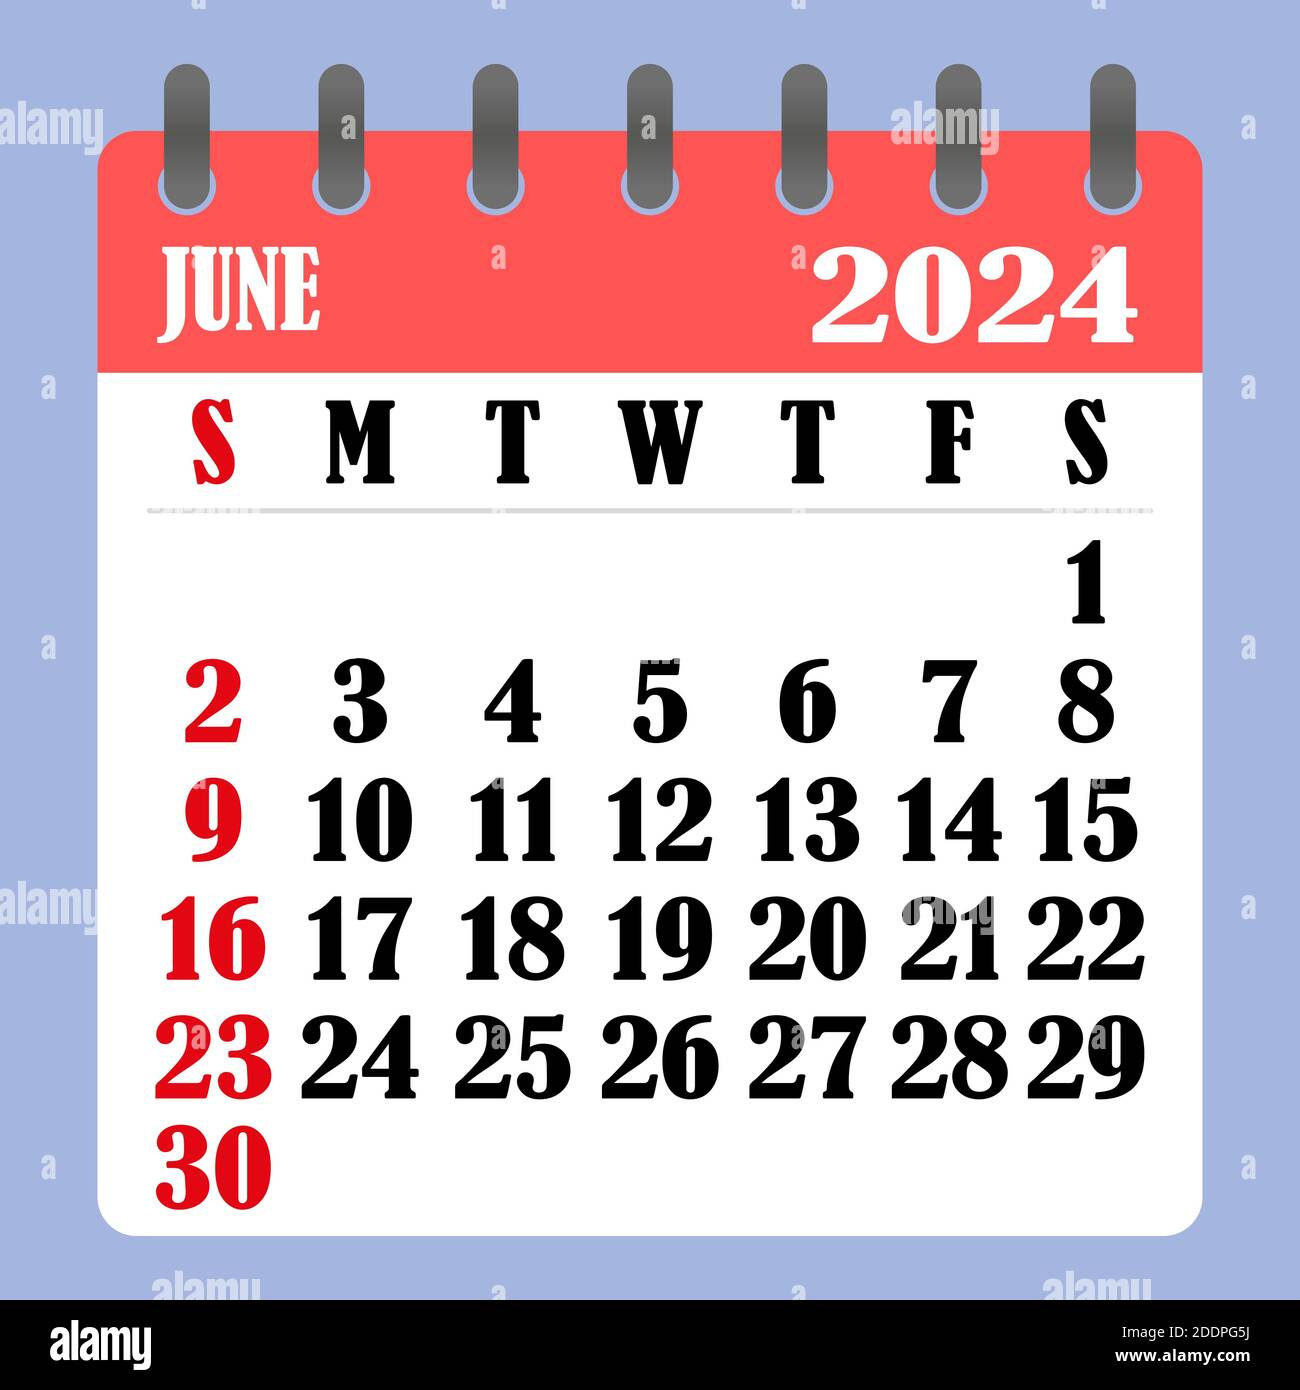 June 2024 Stock Vector Images - Alamy regarding June 7 2024 Calendar